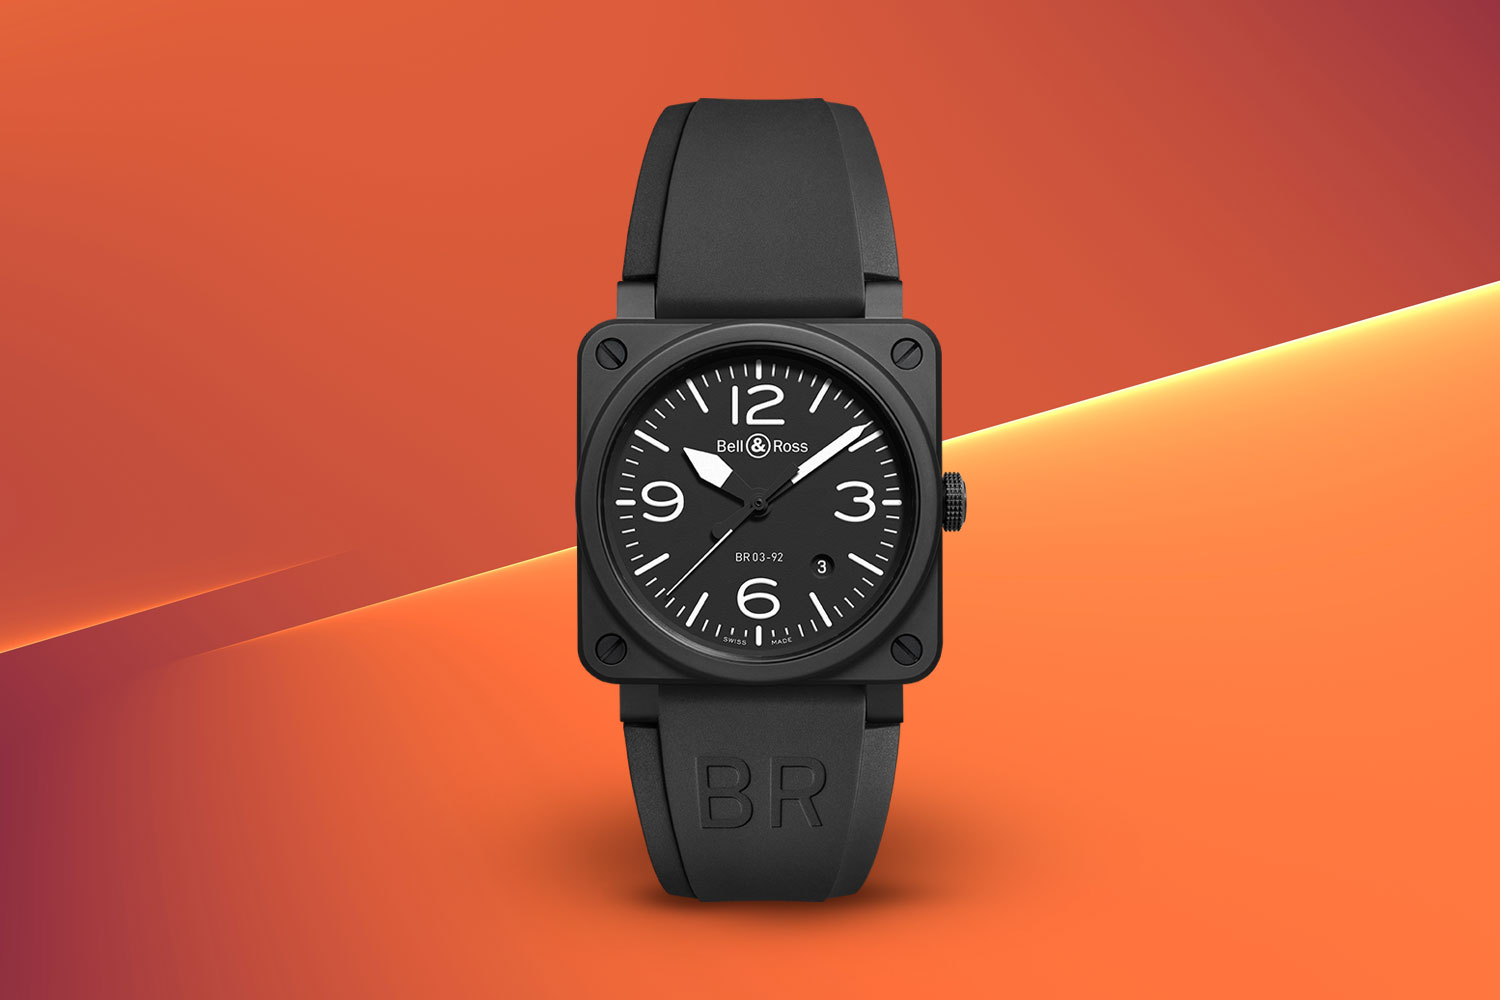 Bell & Ross Pilot's watch on an orange background